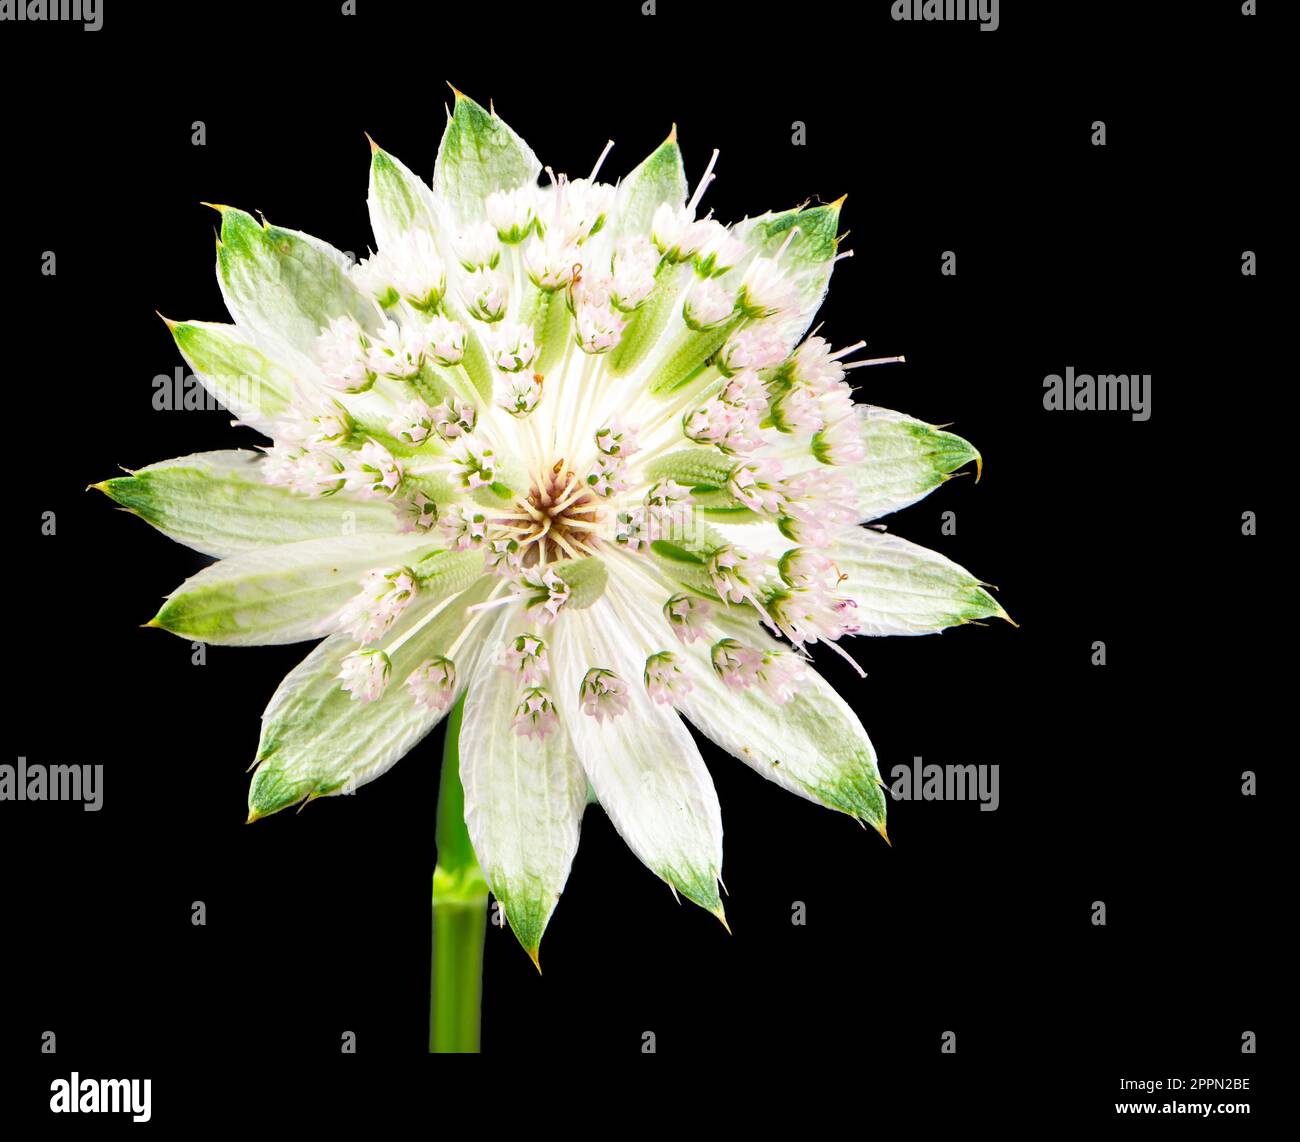 Blossom of a masterwort (astranatia) flower with black background Stock Photo